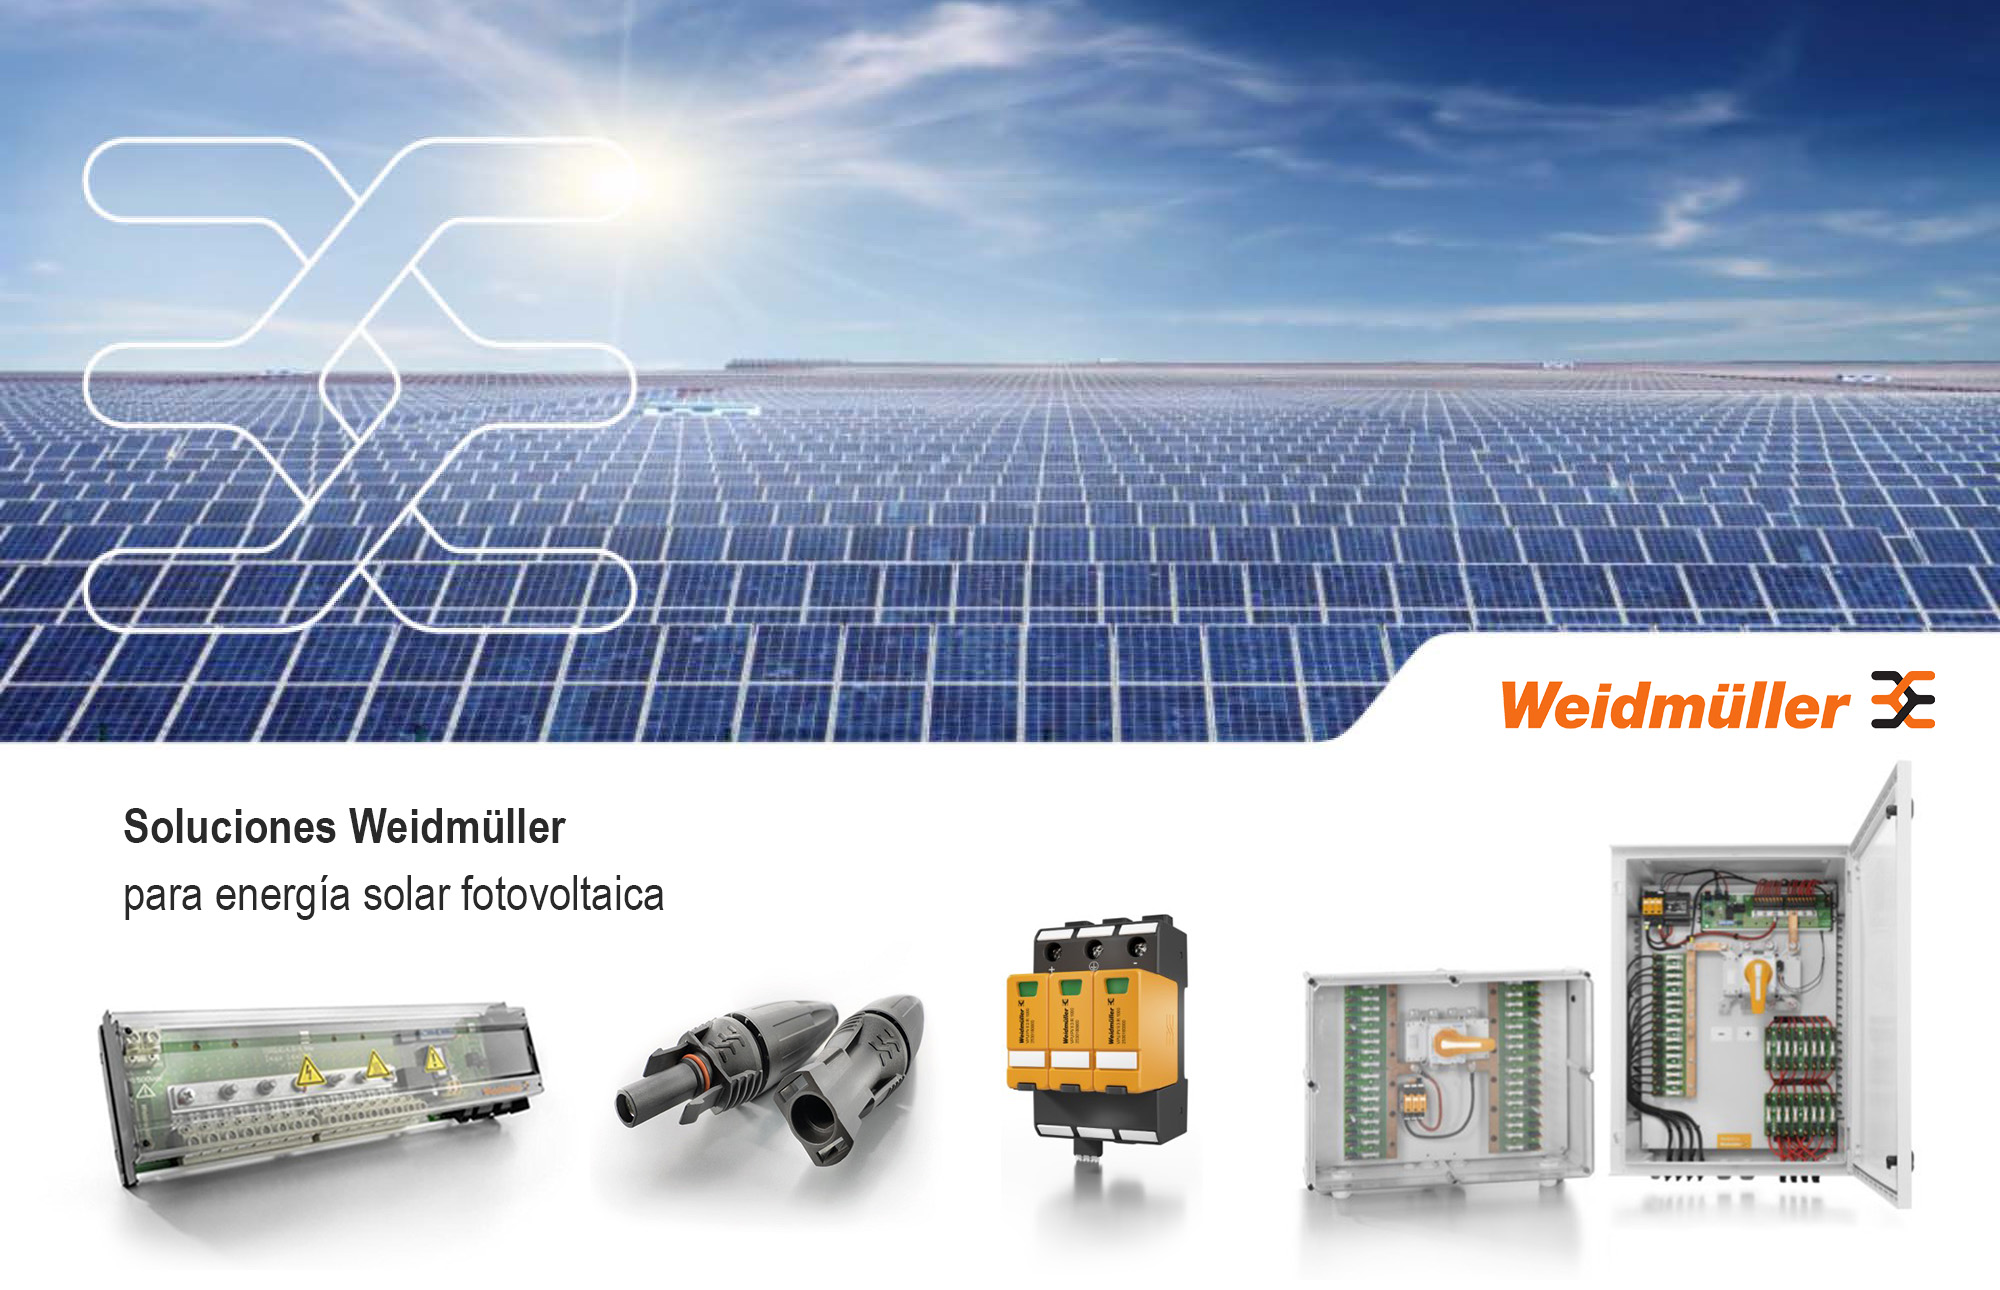 Soluciones de Weidmüller para parques solares fotovoltaicos